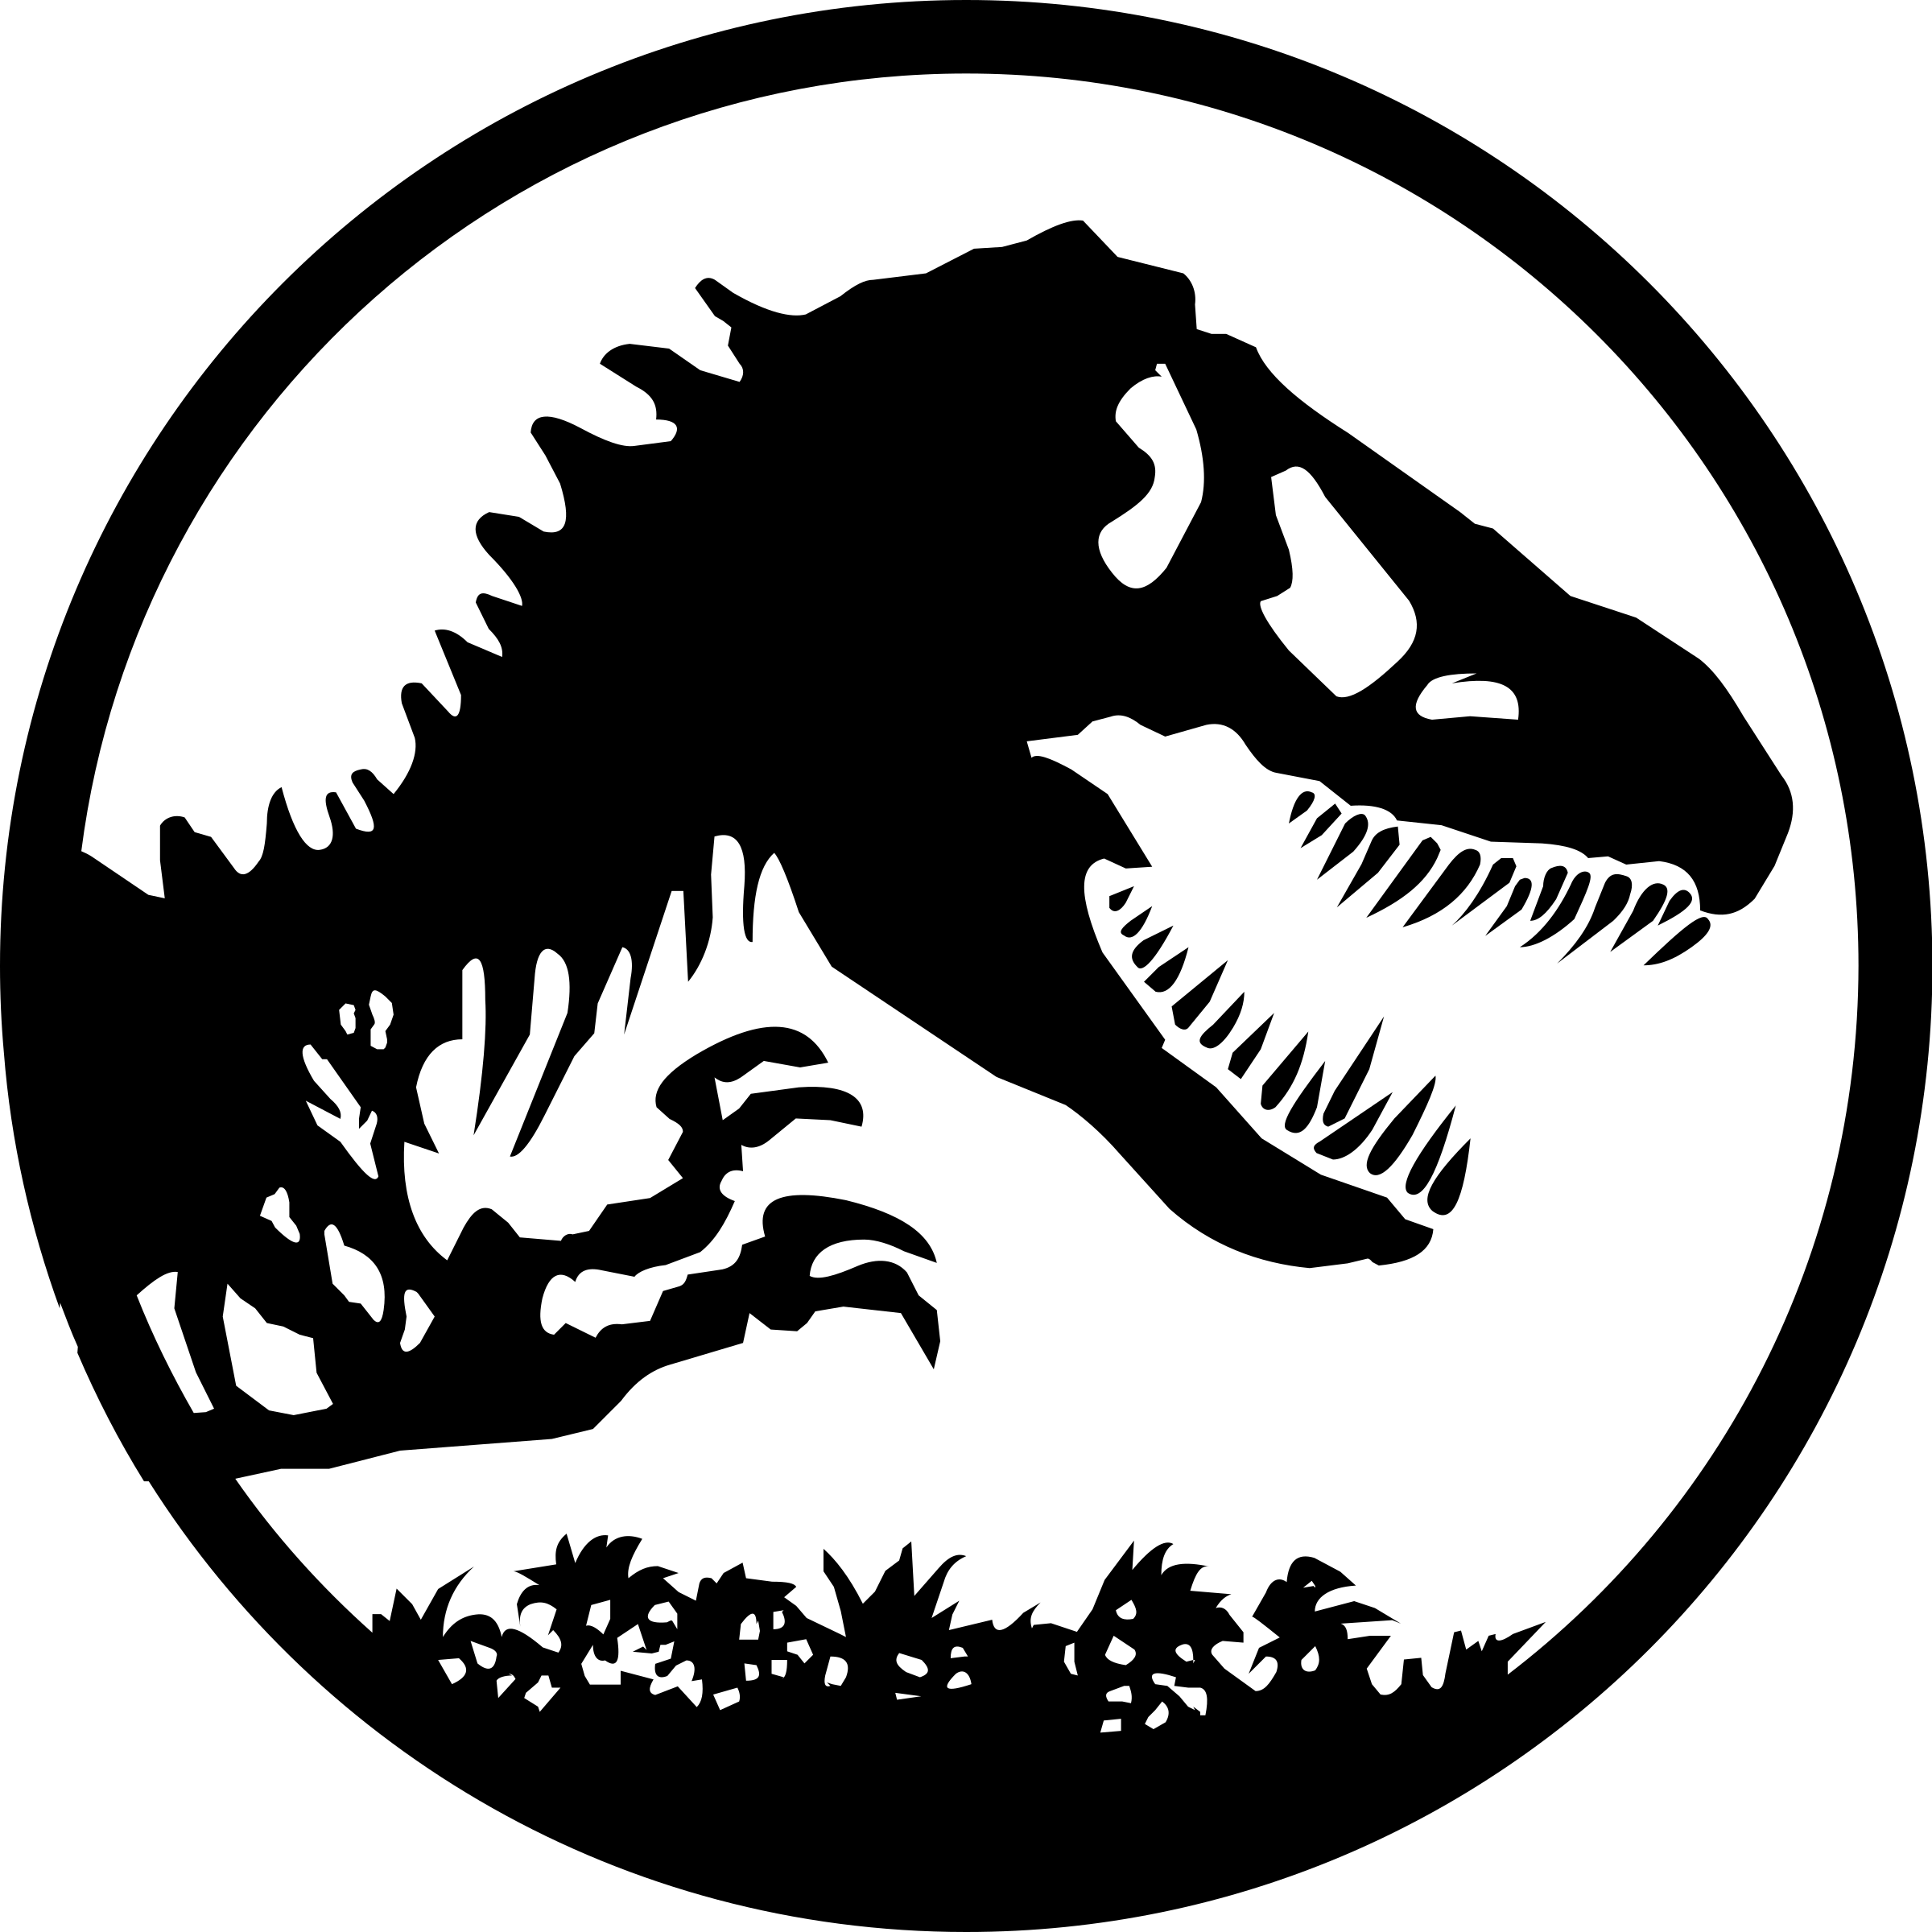 Jurassic World Logo PNG Transparent & SVG Vector.